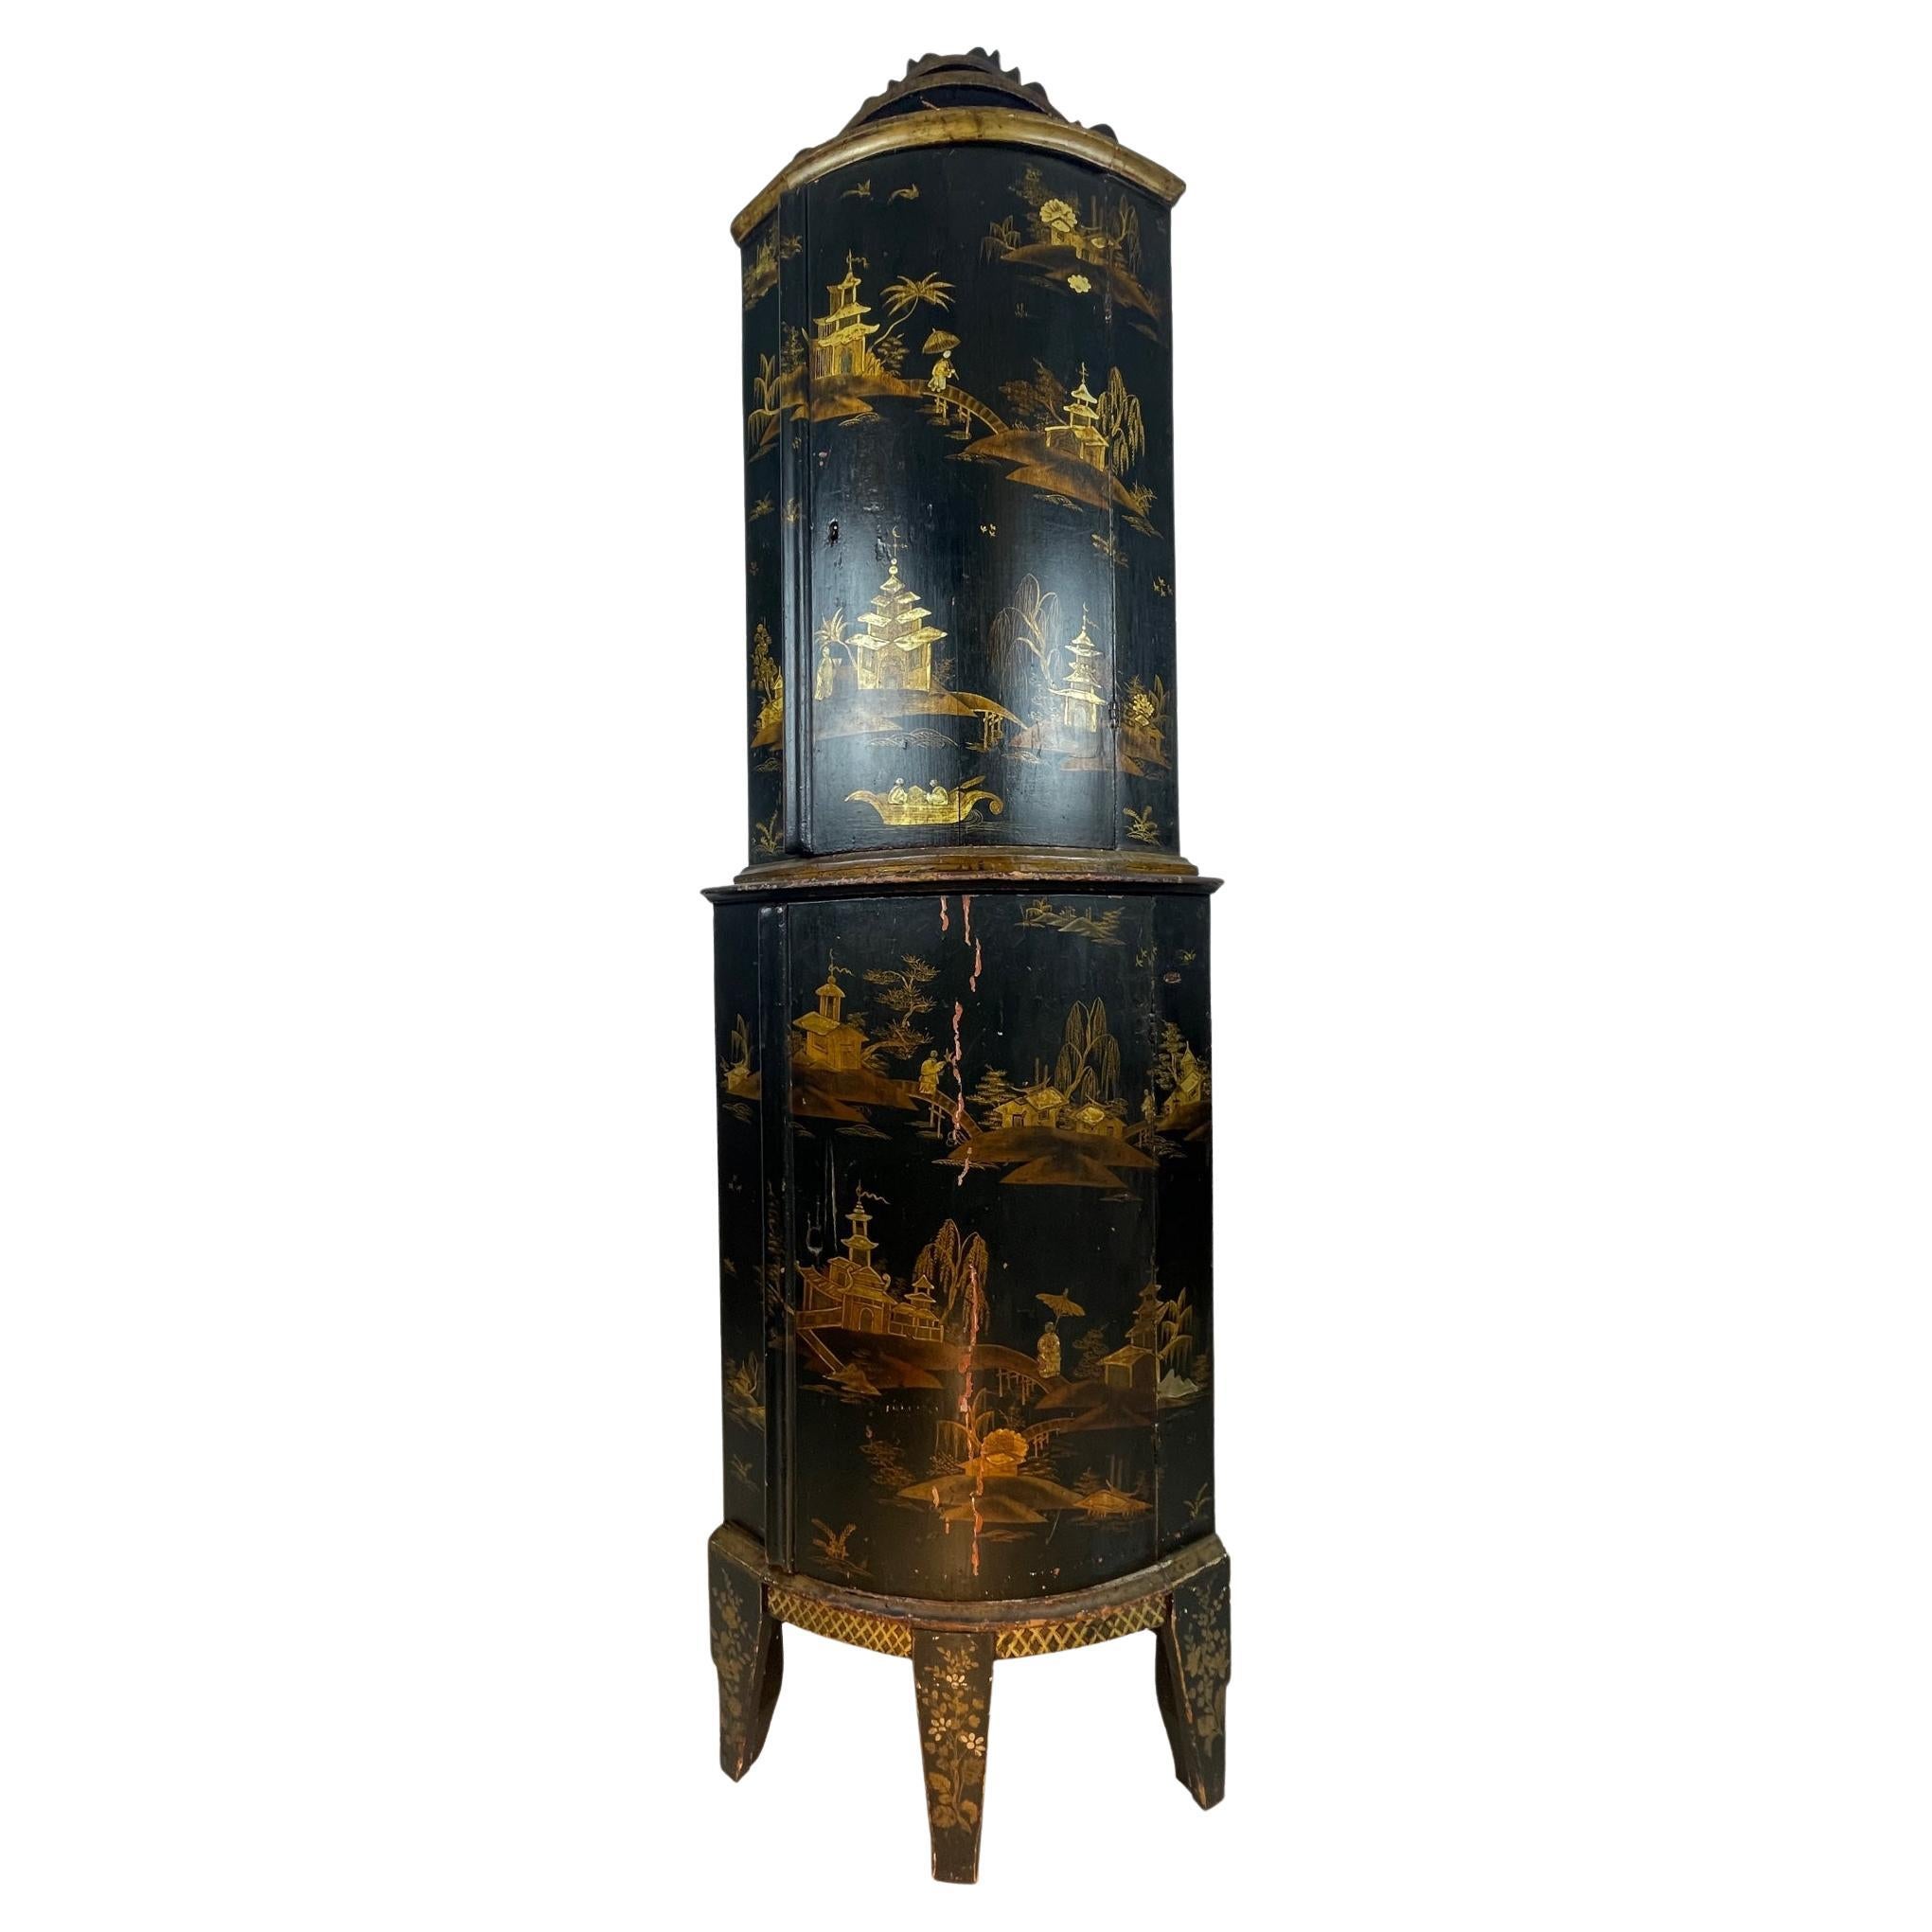 Unique Antique Chinese Corner Cabinet, 19th Century Chinoise Cabinet